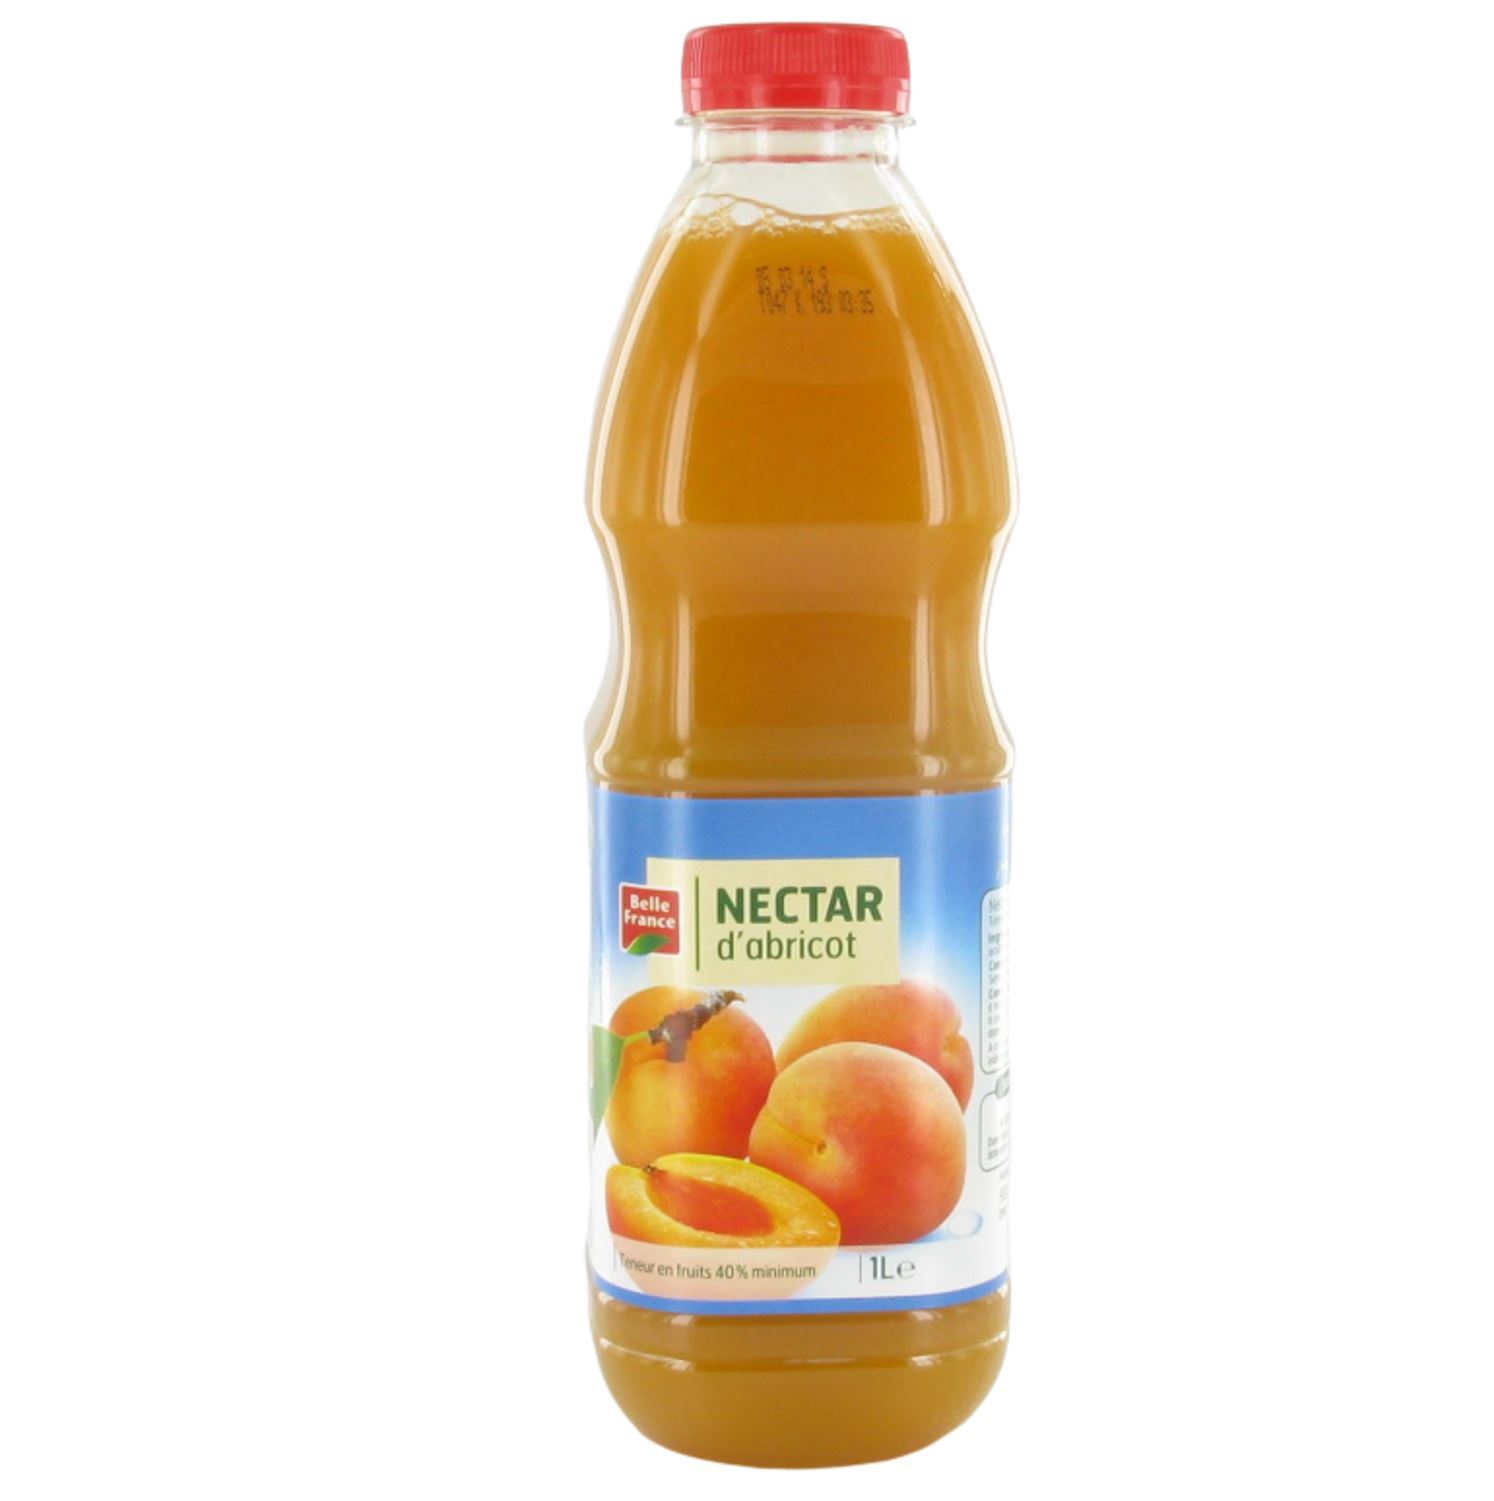 Nectar d abricot